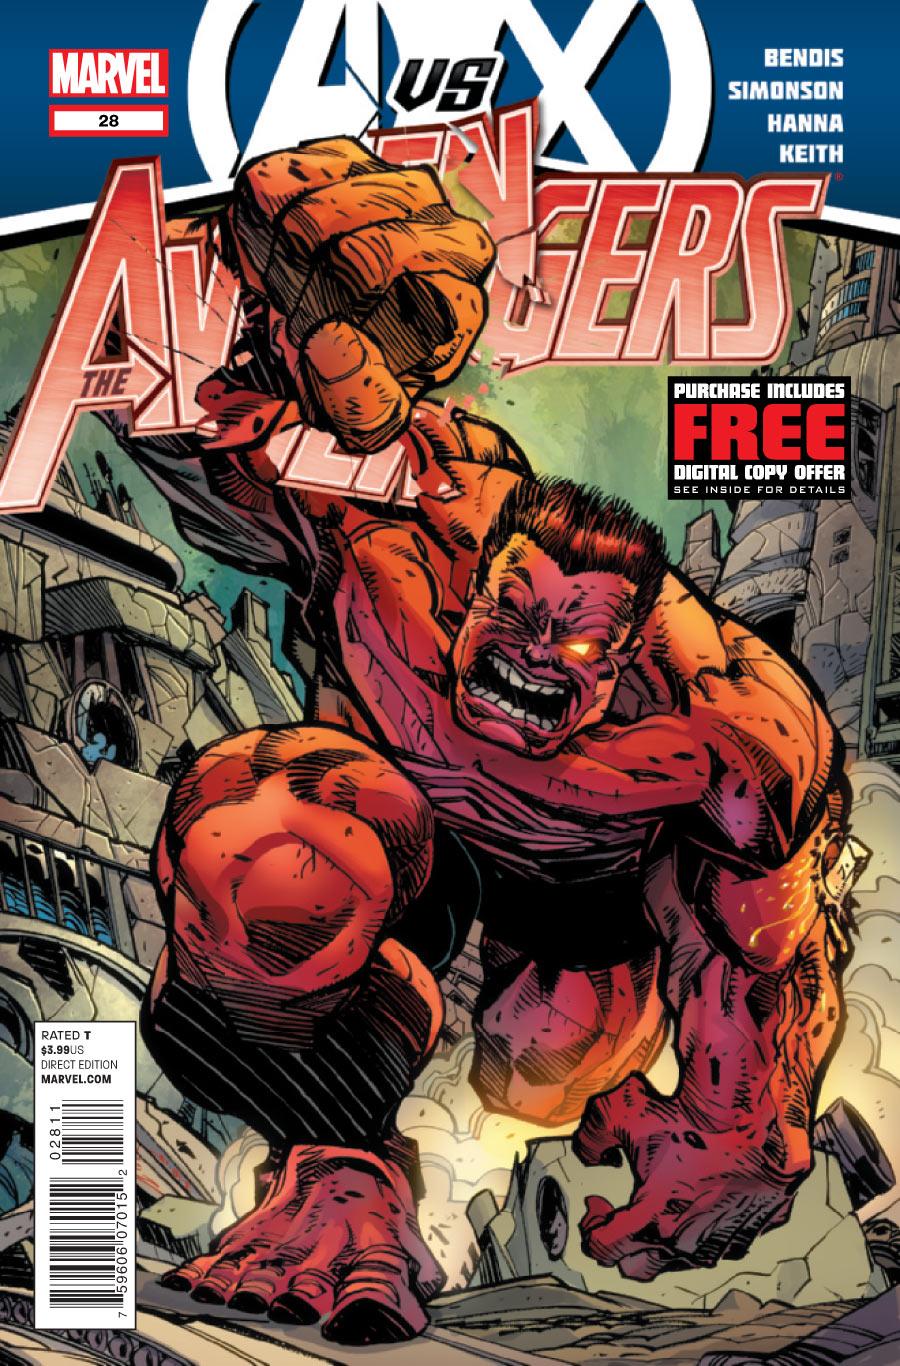 The Avengers Vol. 4 #28